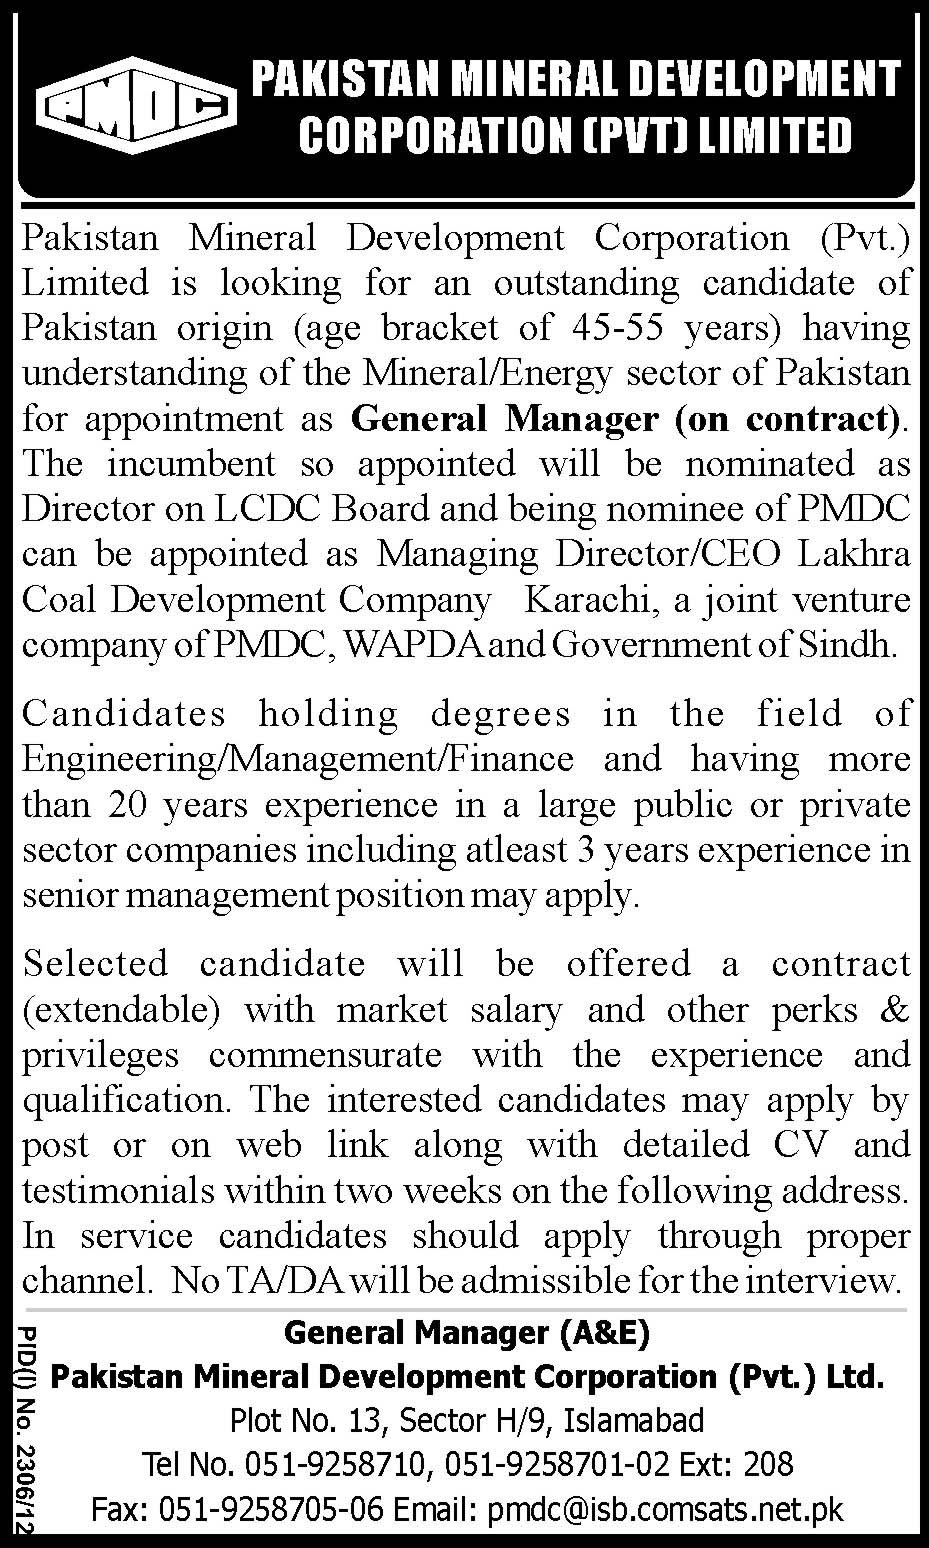 Pakistan Mineral Development Corporation (PMDC) Needs General Manager (GM)